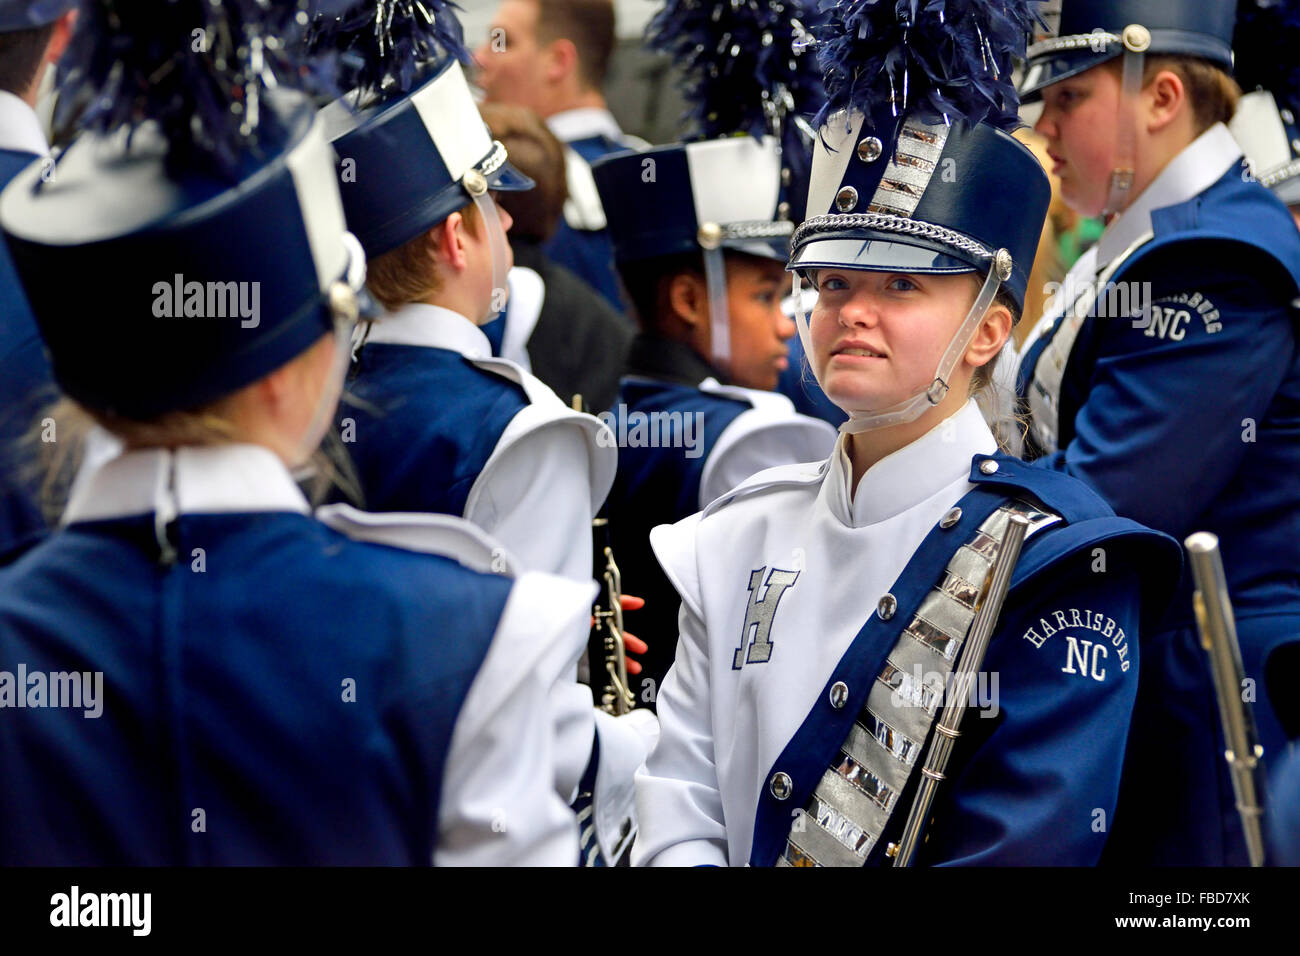 London, UK. New Year's Day Parade, Jan 1st 2016. Hickory Ridge High School Blue Regiment Marching band,  Harrisburg, N Carolina Stock Photo